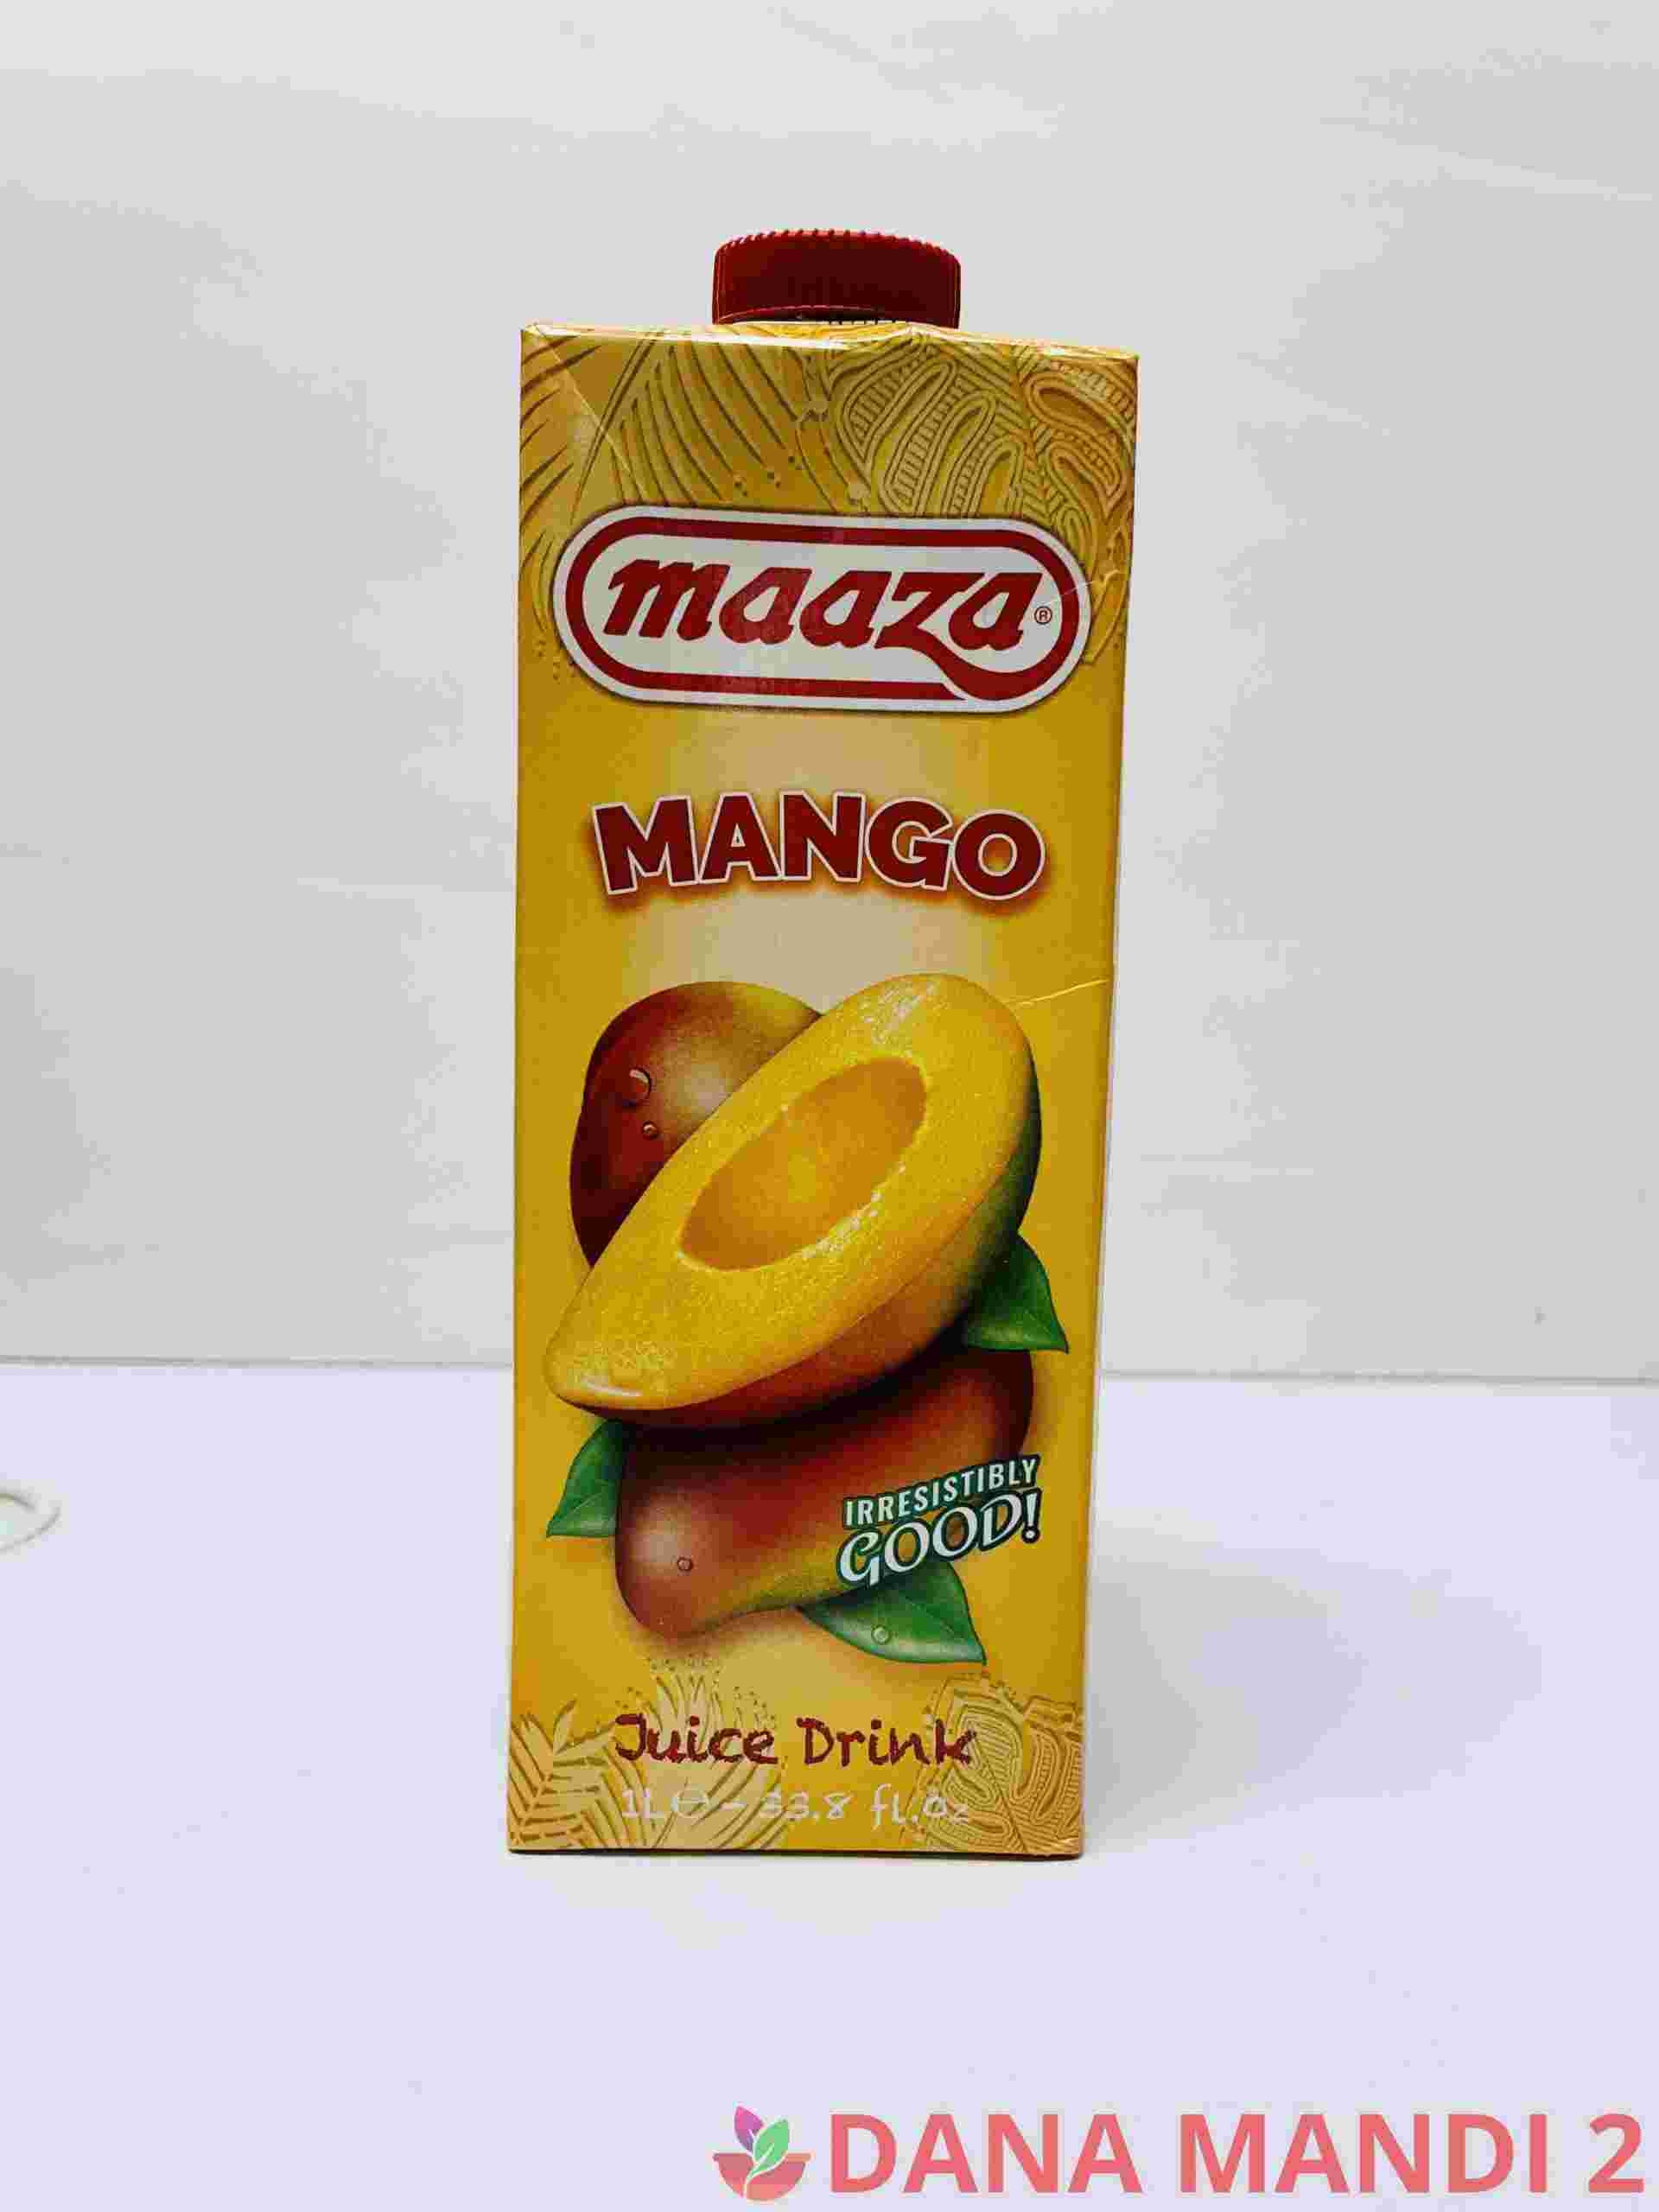 Maaza Mango Juice